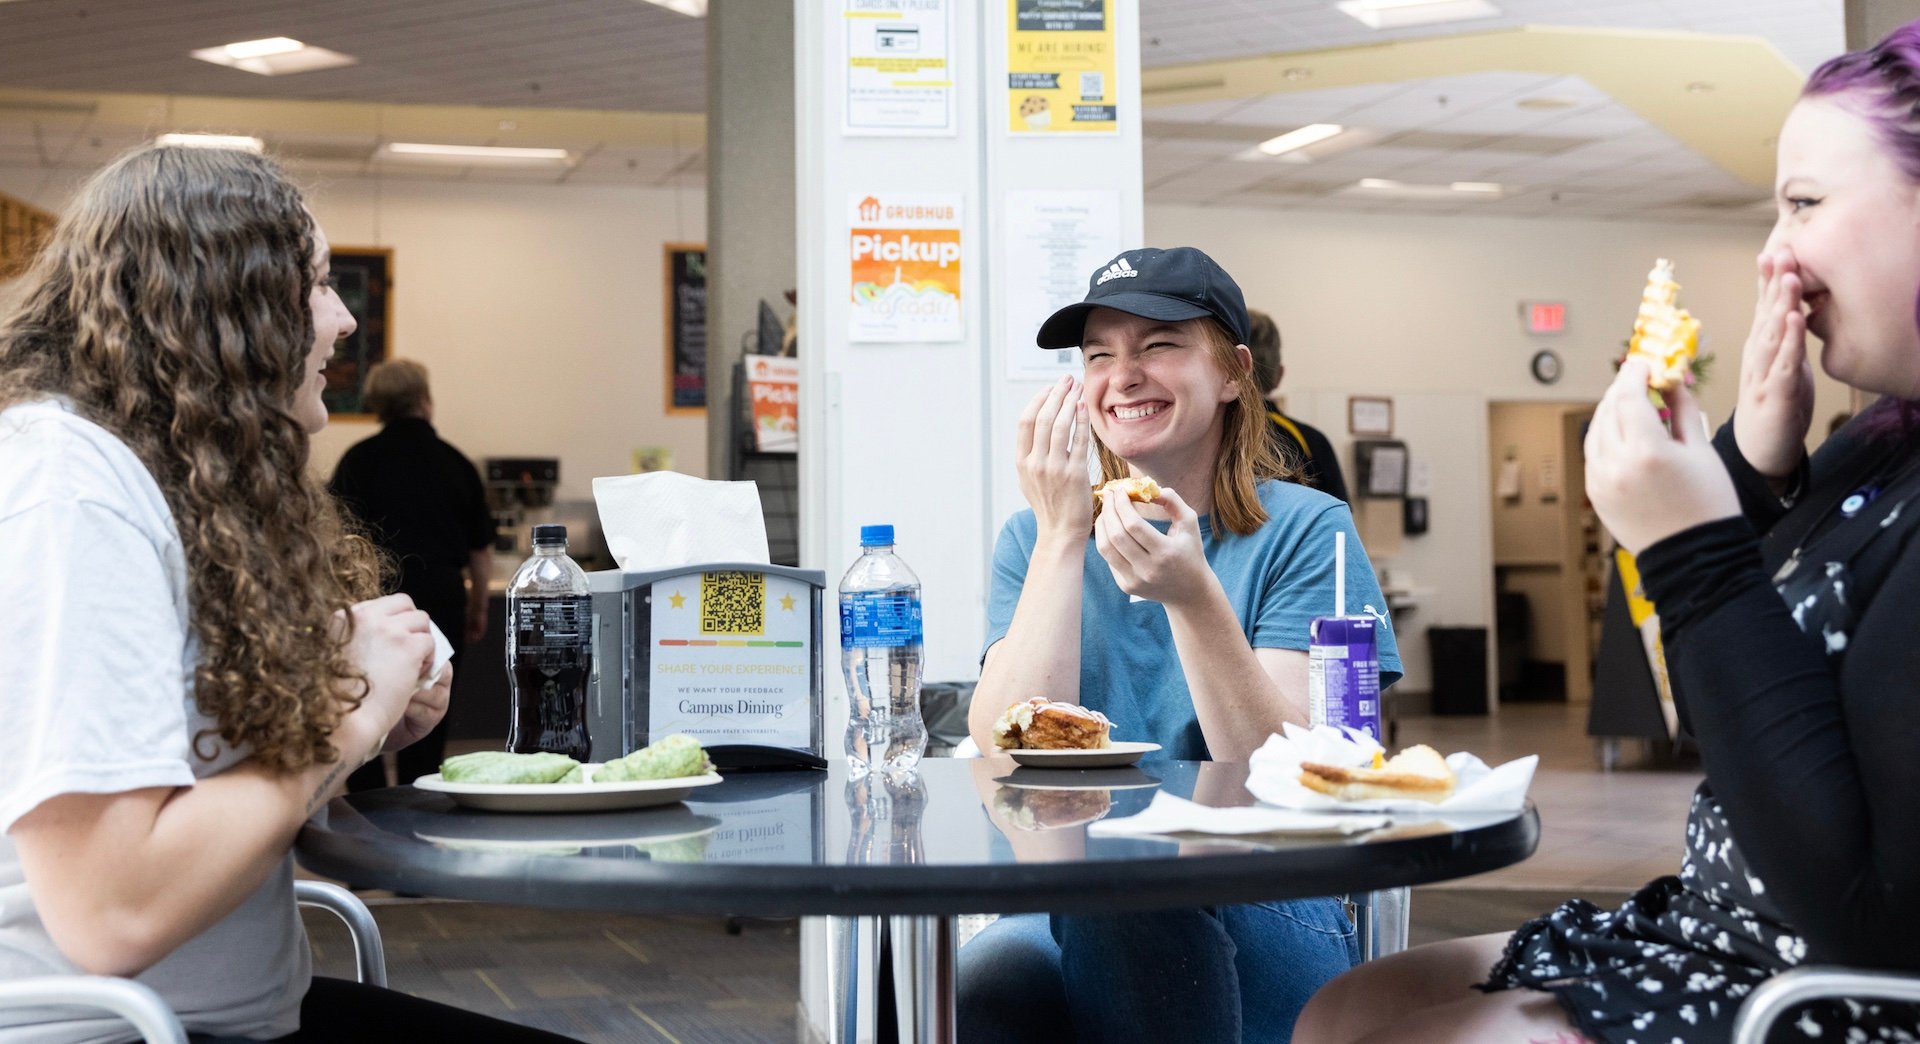 College students rank wellness activities, campus dining priorities photo